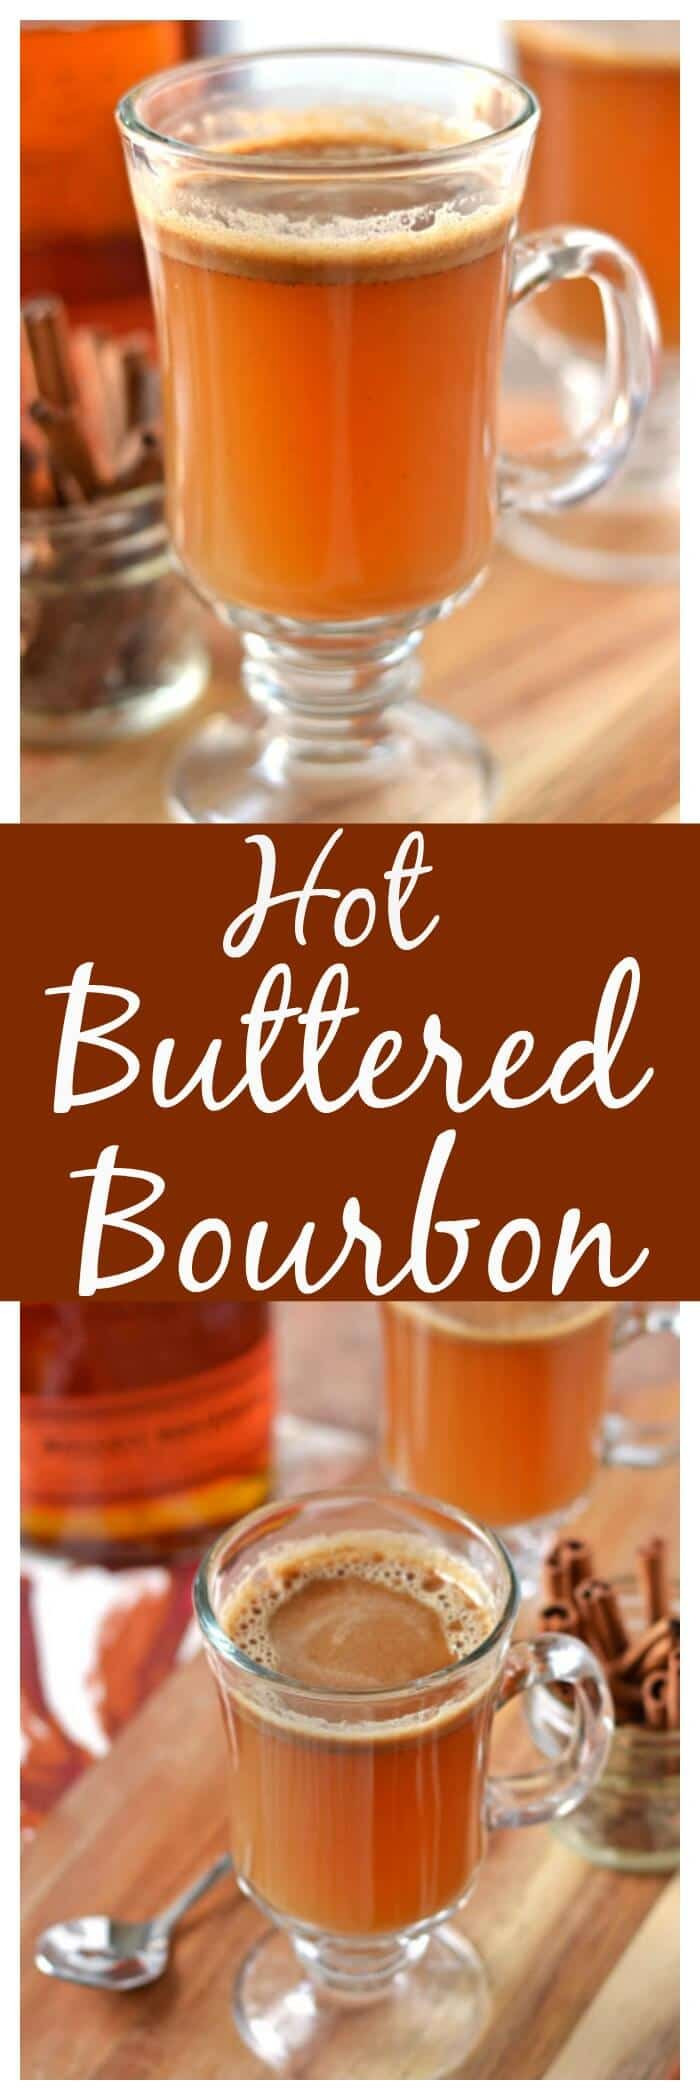 Bourbon Drinks For Winter
 Hot Buttered Bourbon